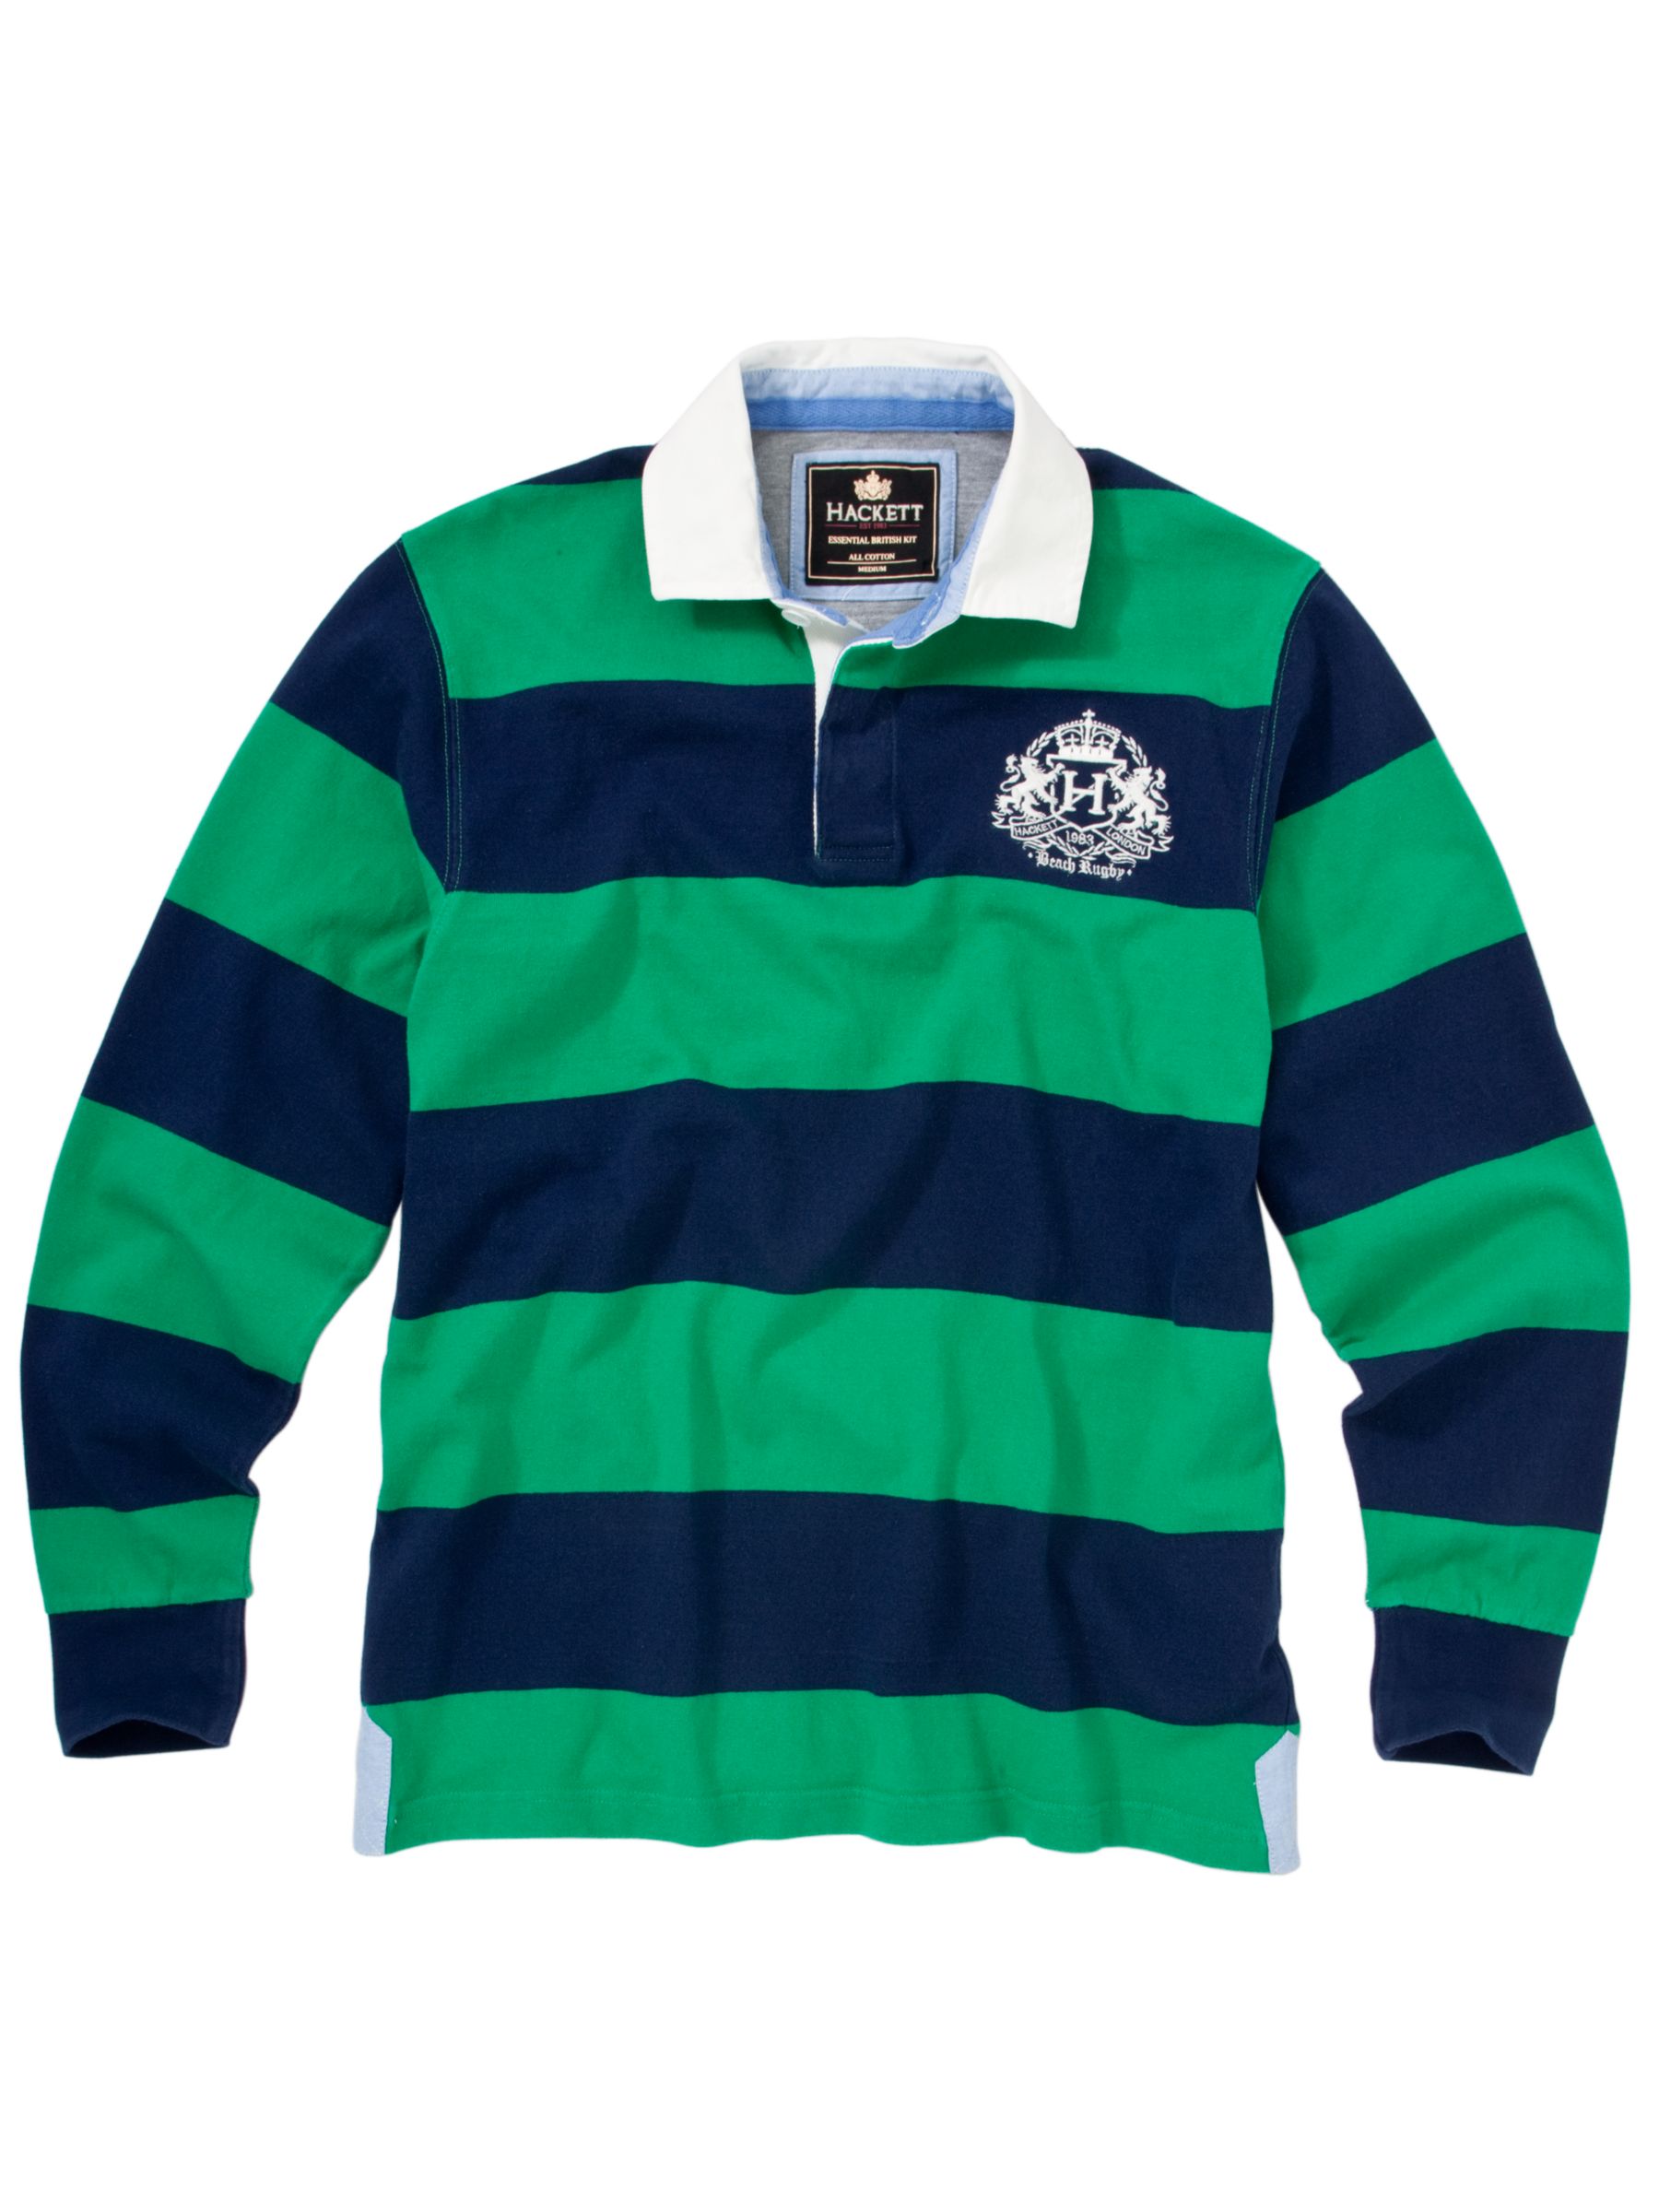 Hackett London Oxford Trim Rugby Shirt, Navy/Green